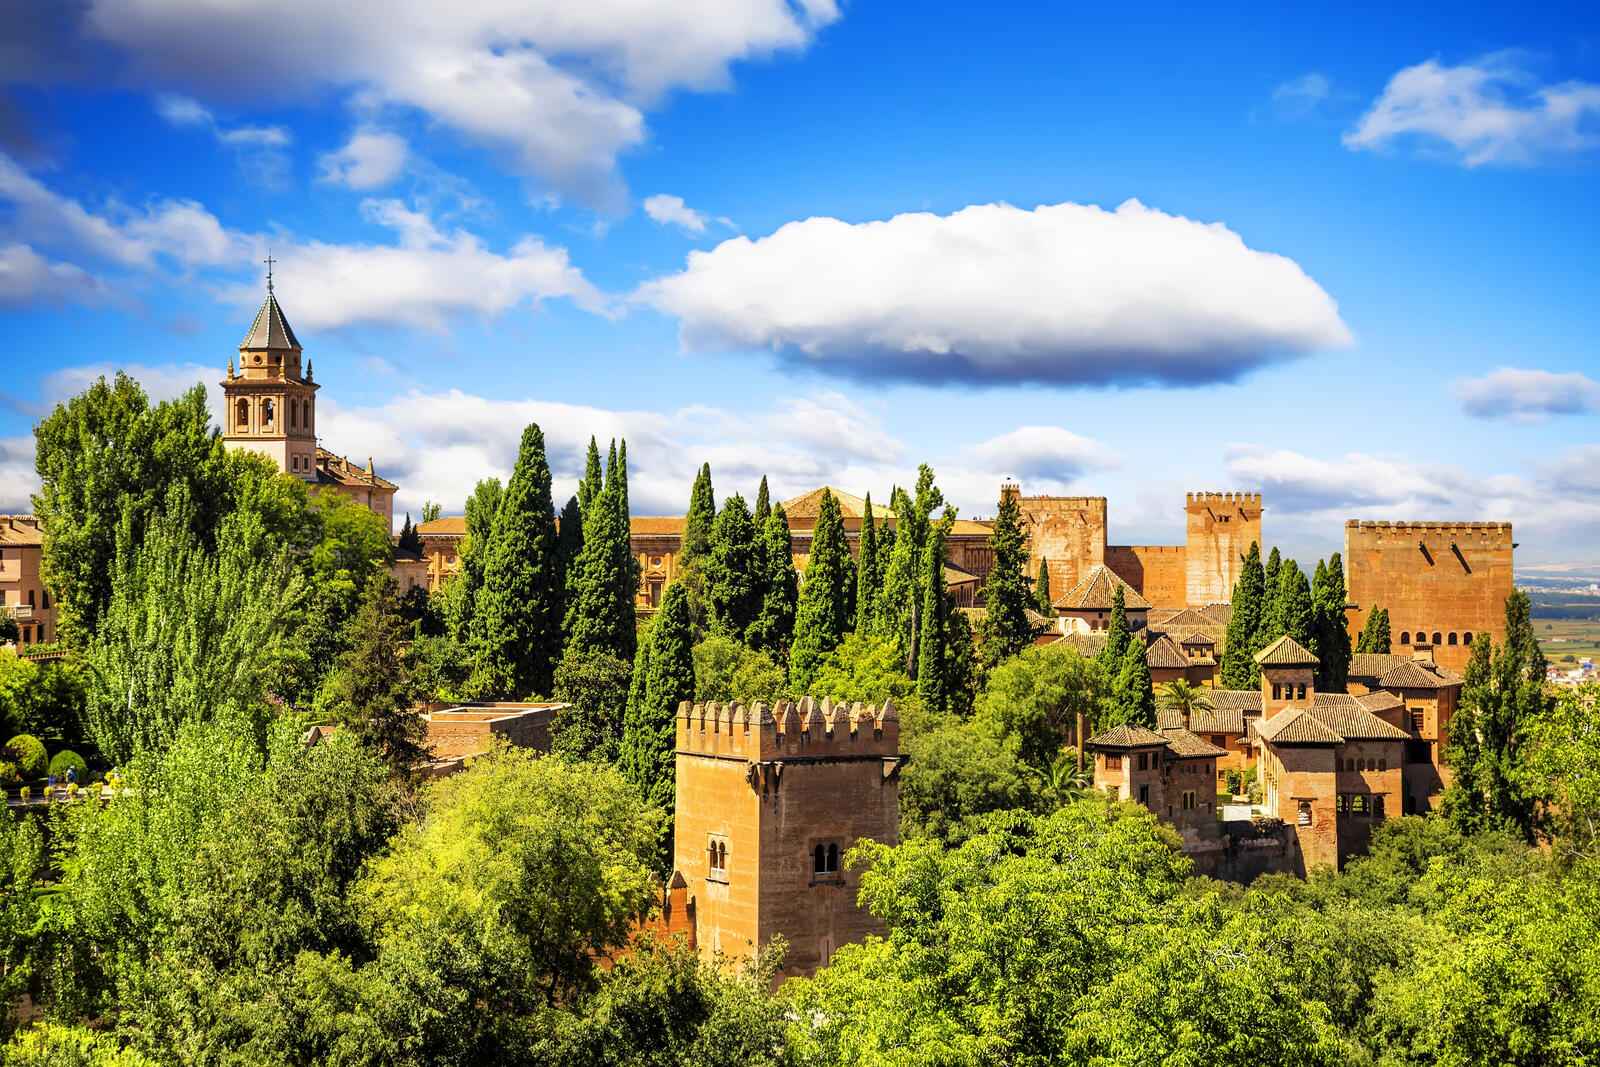 Обои Ancient arabic fortress of Alhambra Granada Spain на рабочий стол